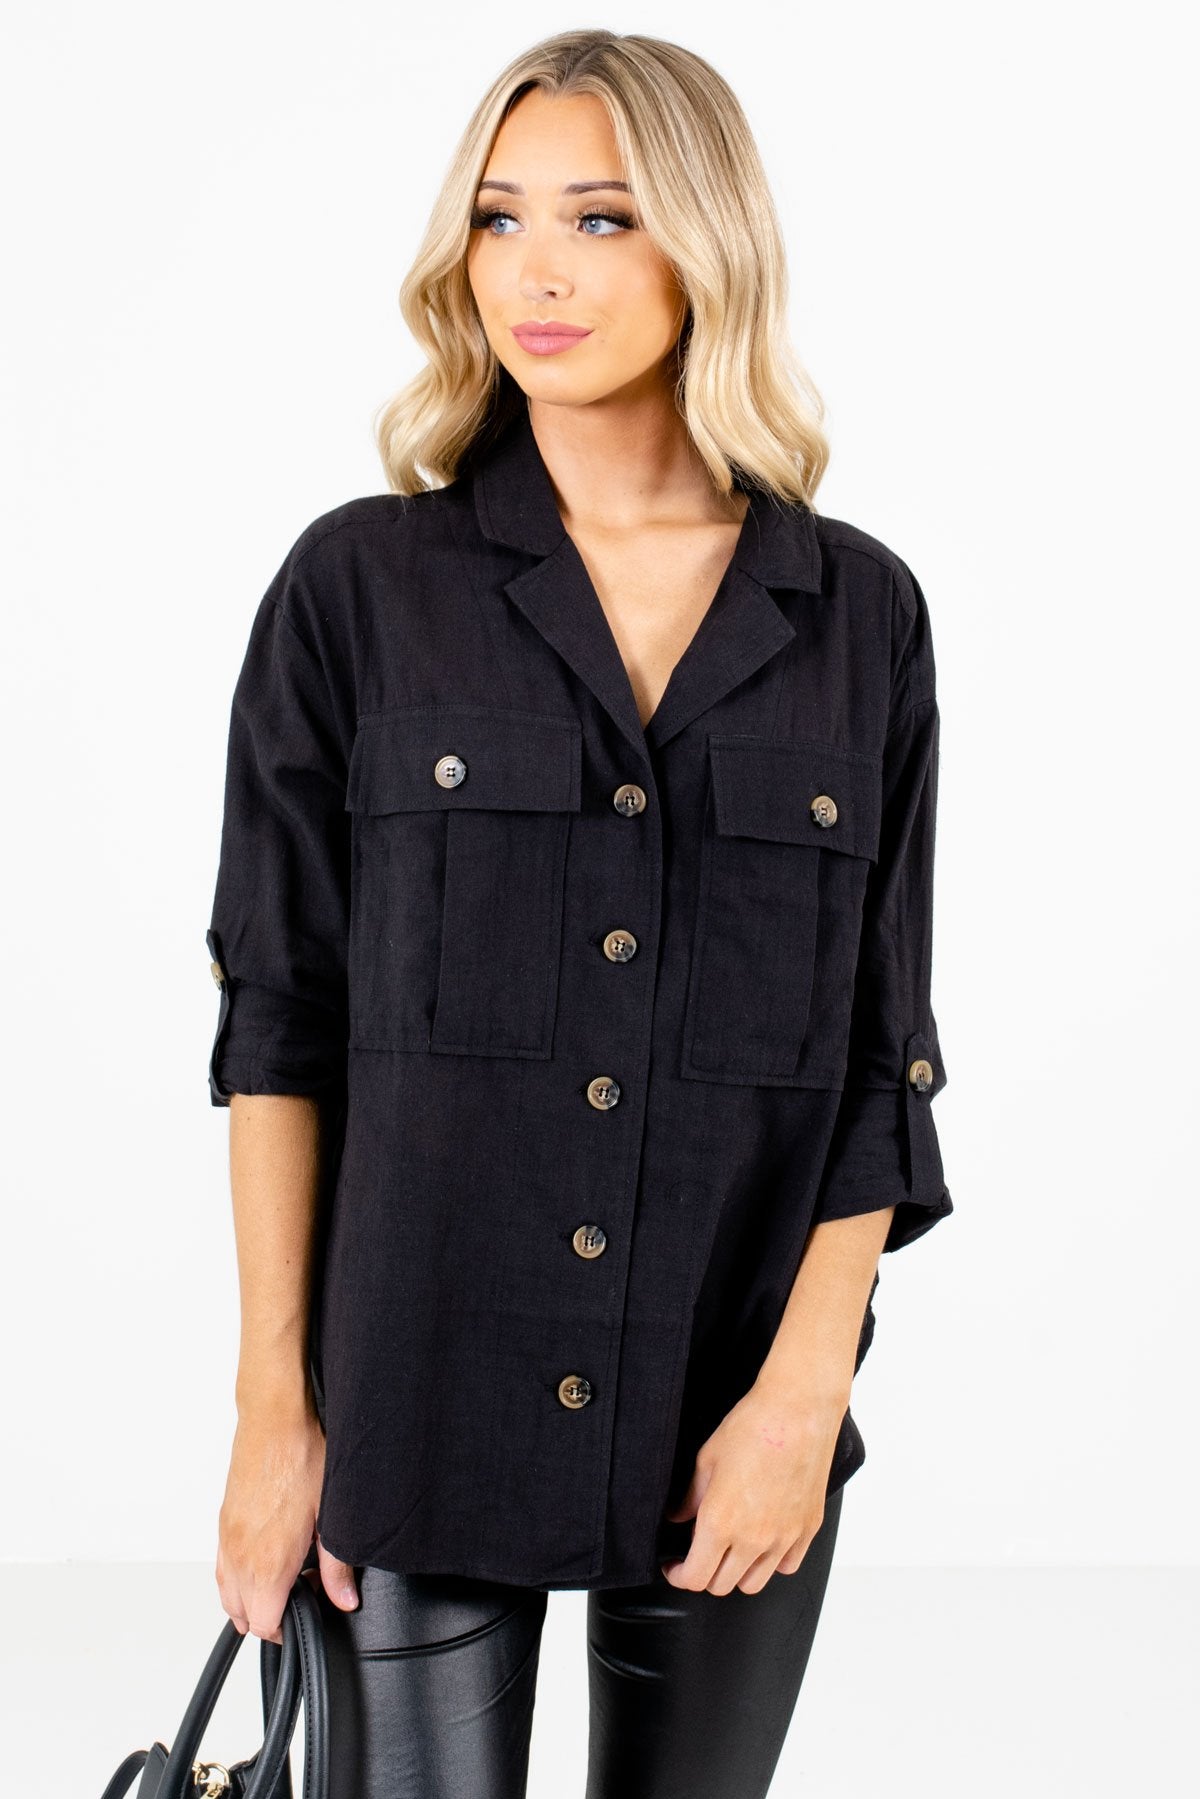 Black Button-Up Front Boutique Shirts for Women